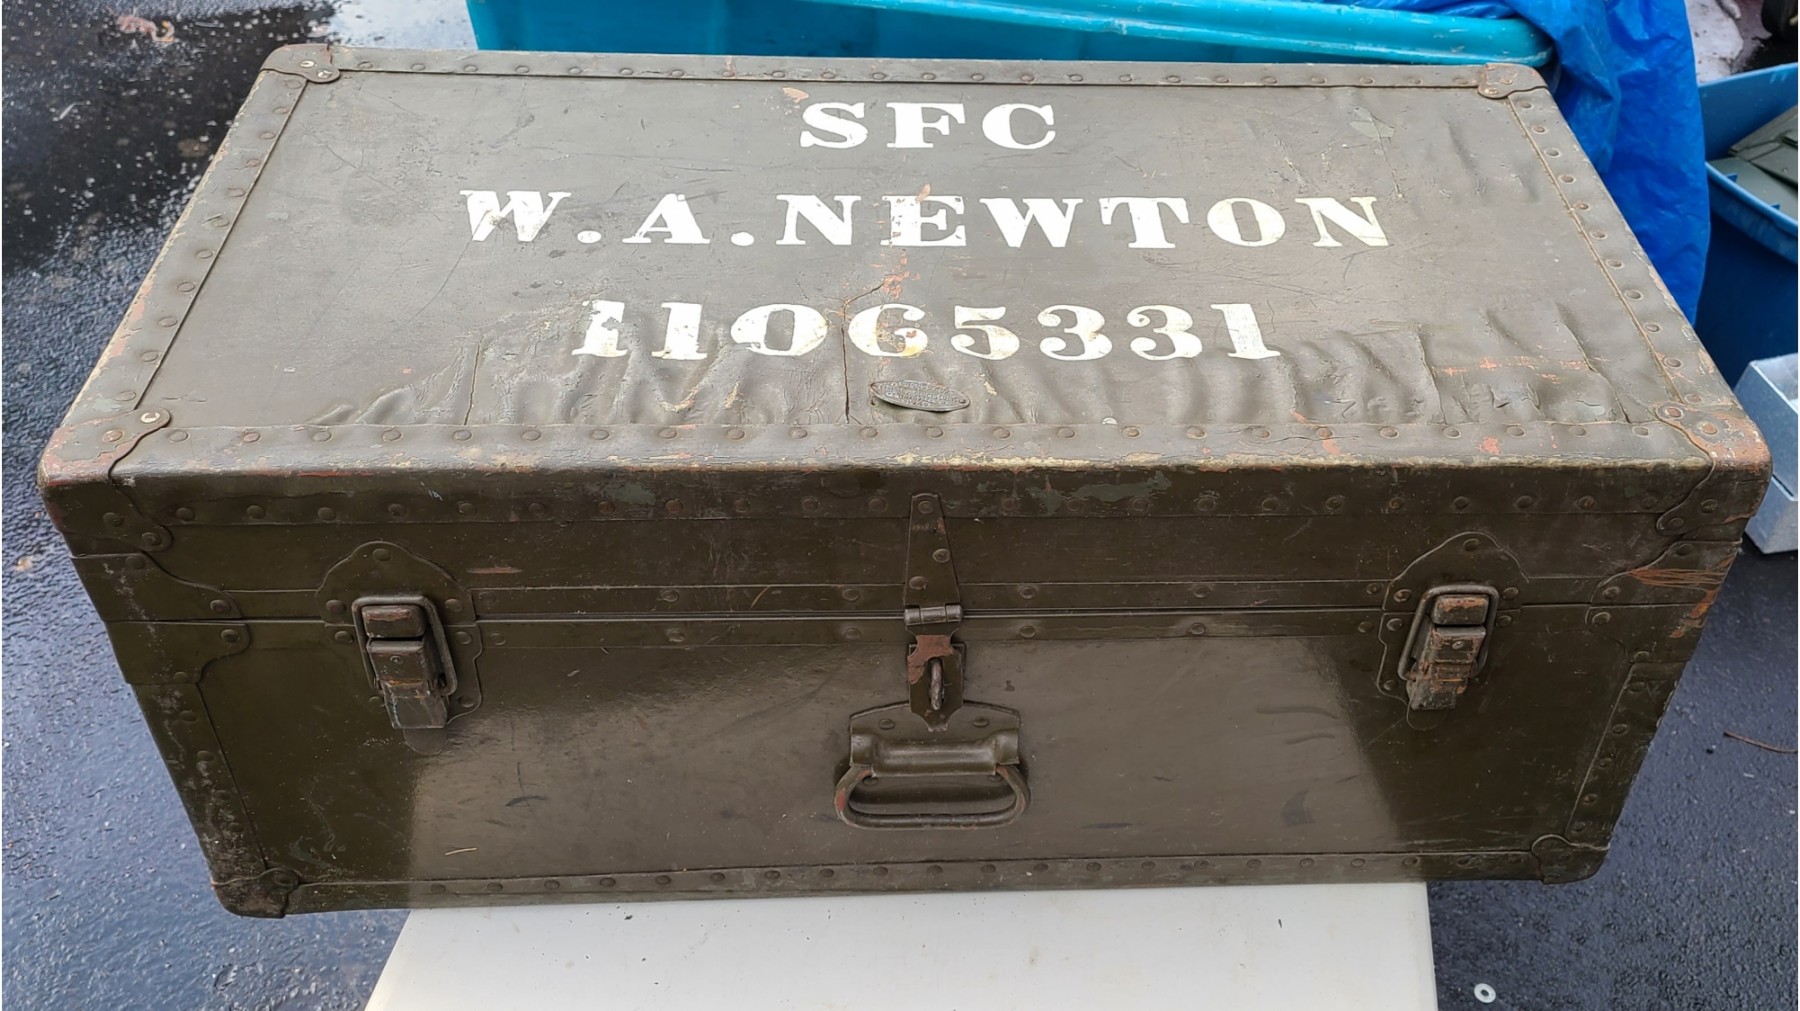 Sold at Auction: Vintage Foot Locker